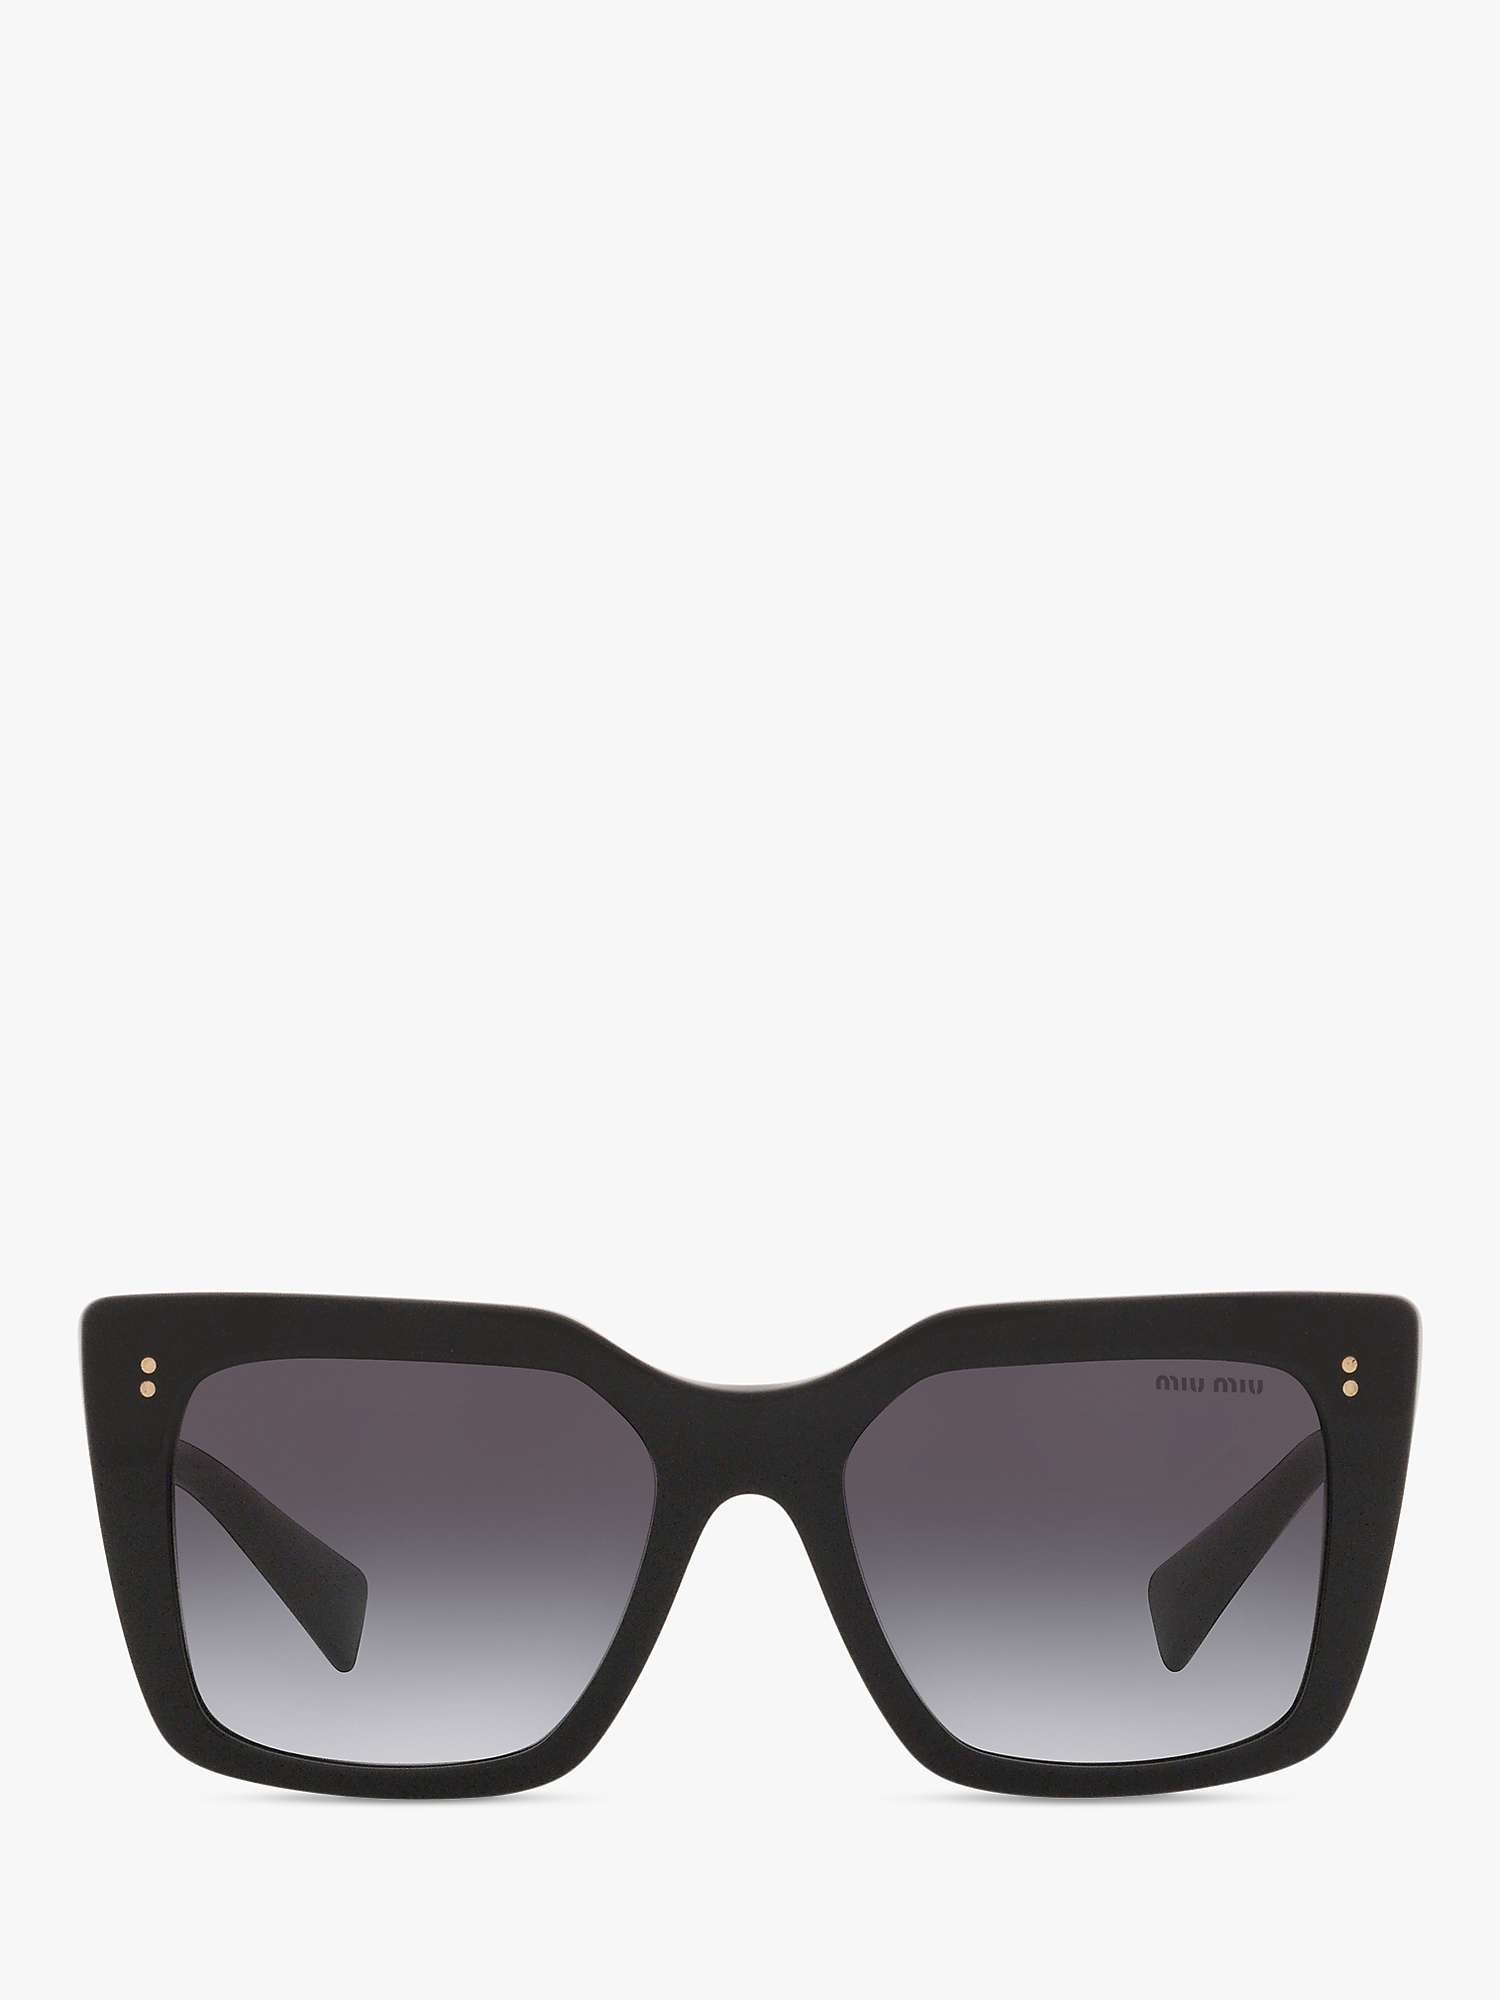 Buy Miu Miu MU 02WS Women's Square Sunglasses, Black/Grey Gradient Online at johnlewis.com